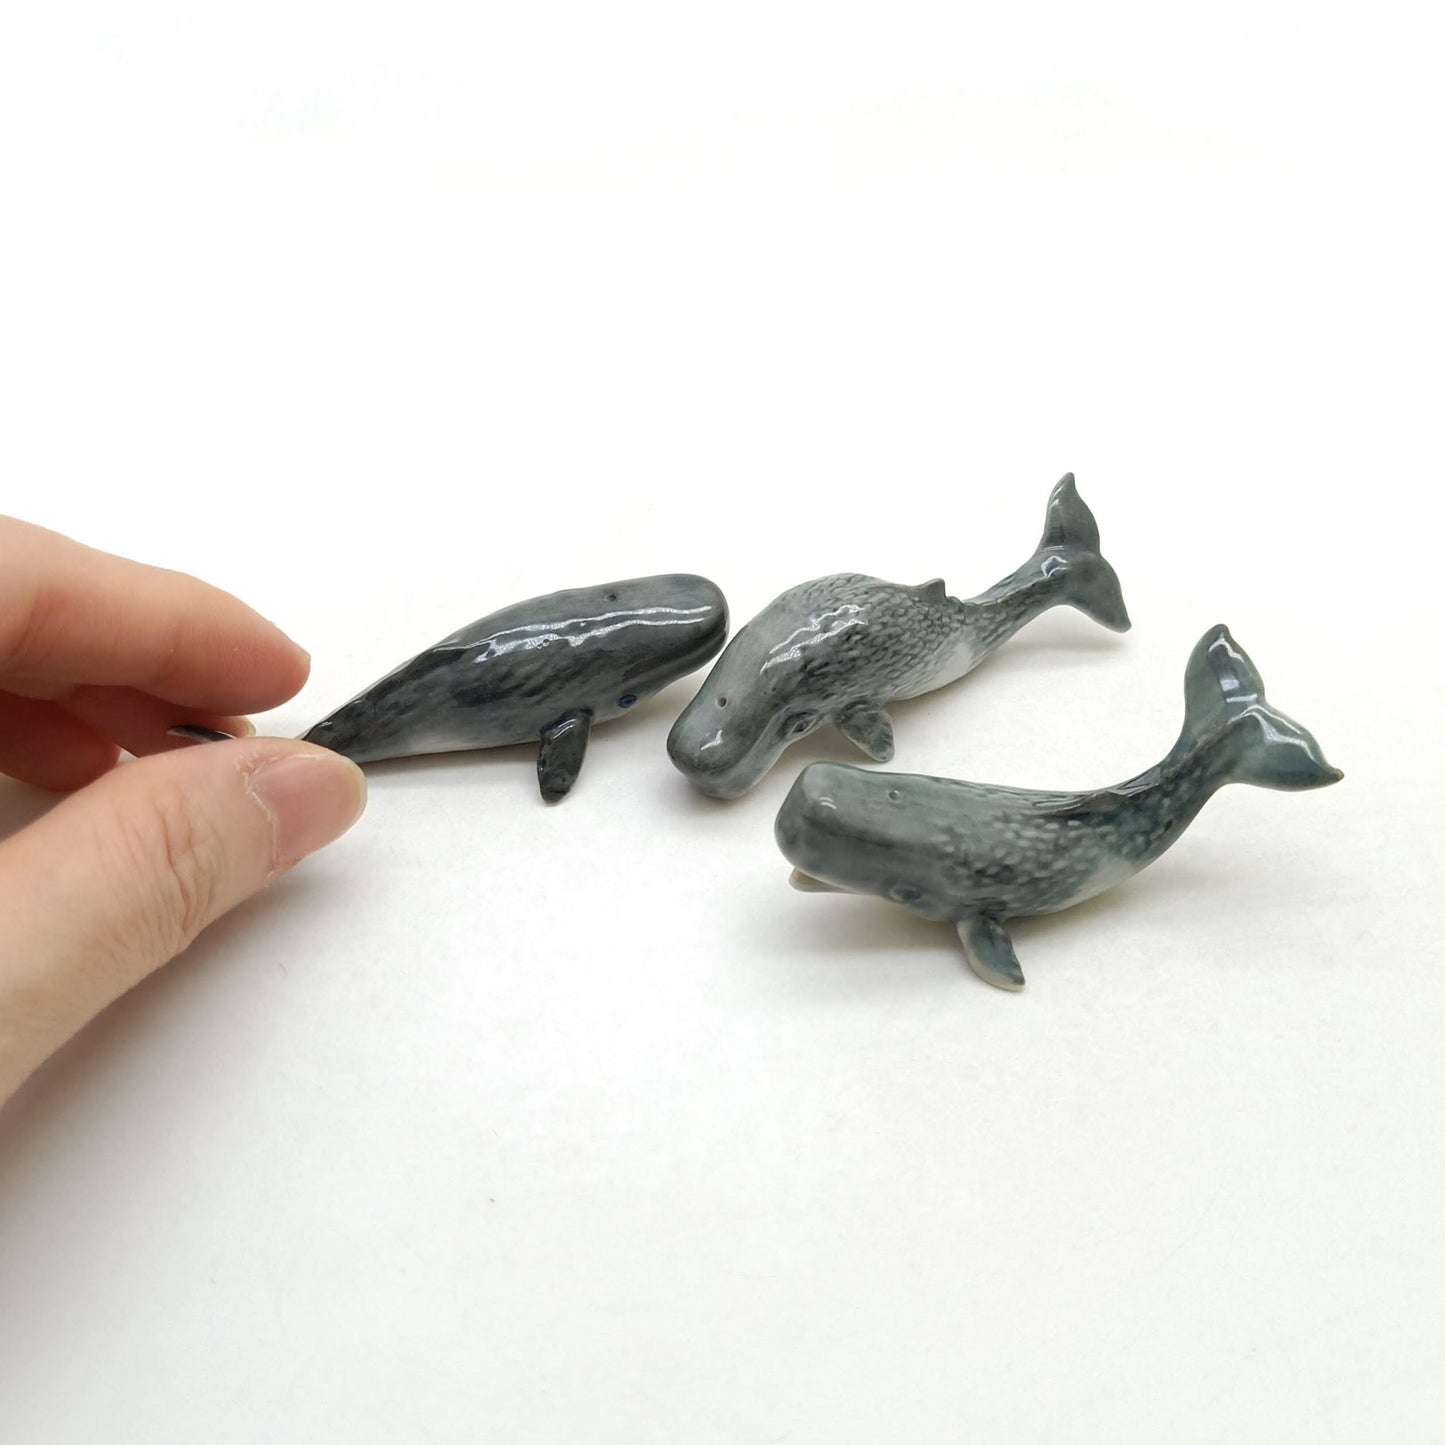 3 Sperm Whale Figurines